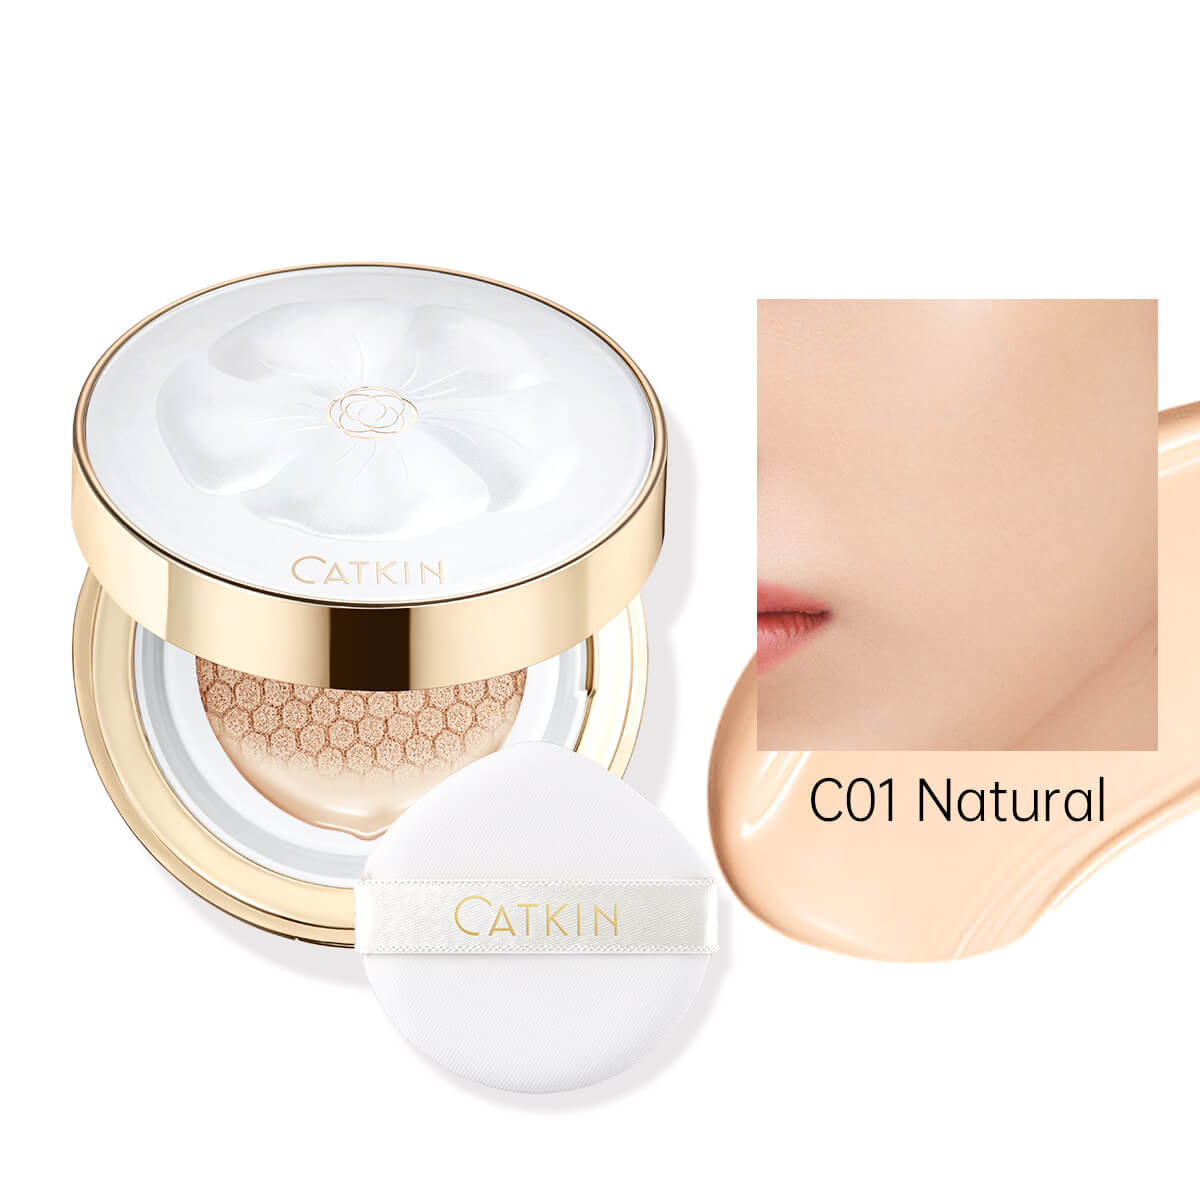 CATKIN Flawless Glow Long Lasting Cushion Foundation Skin Nourishing & Makeup 2 In 1 Natural Finish